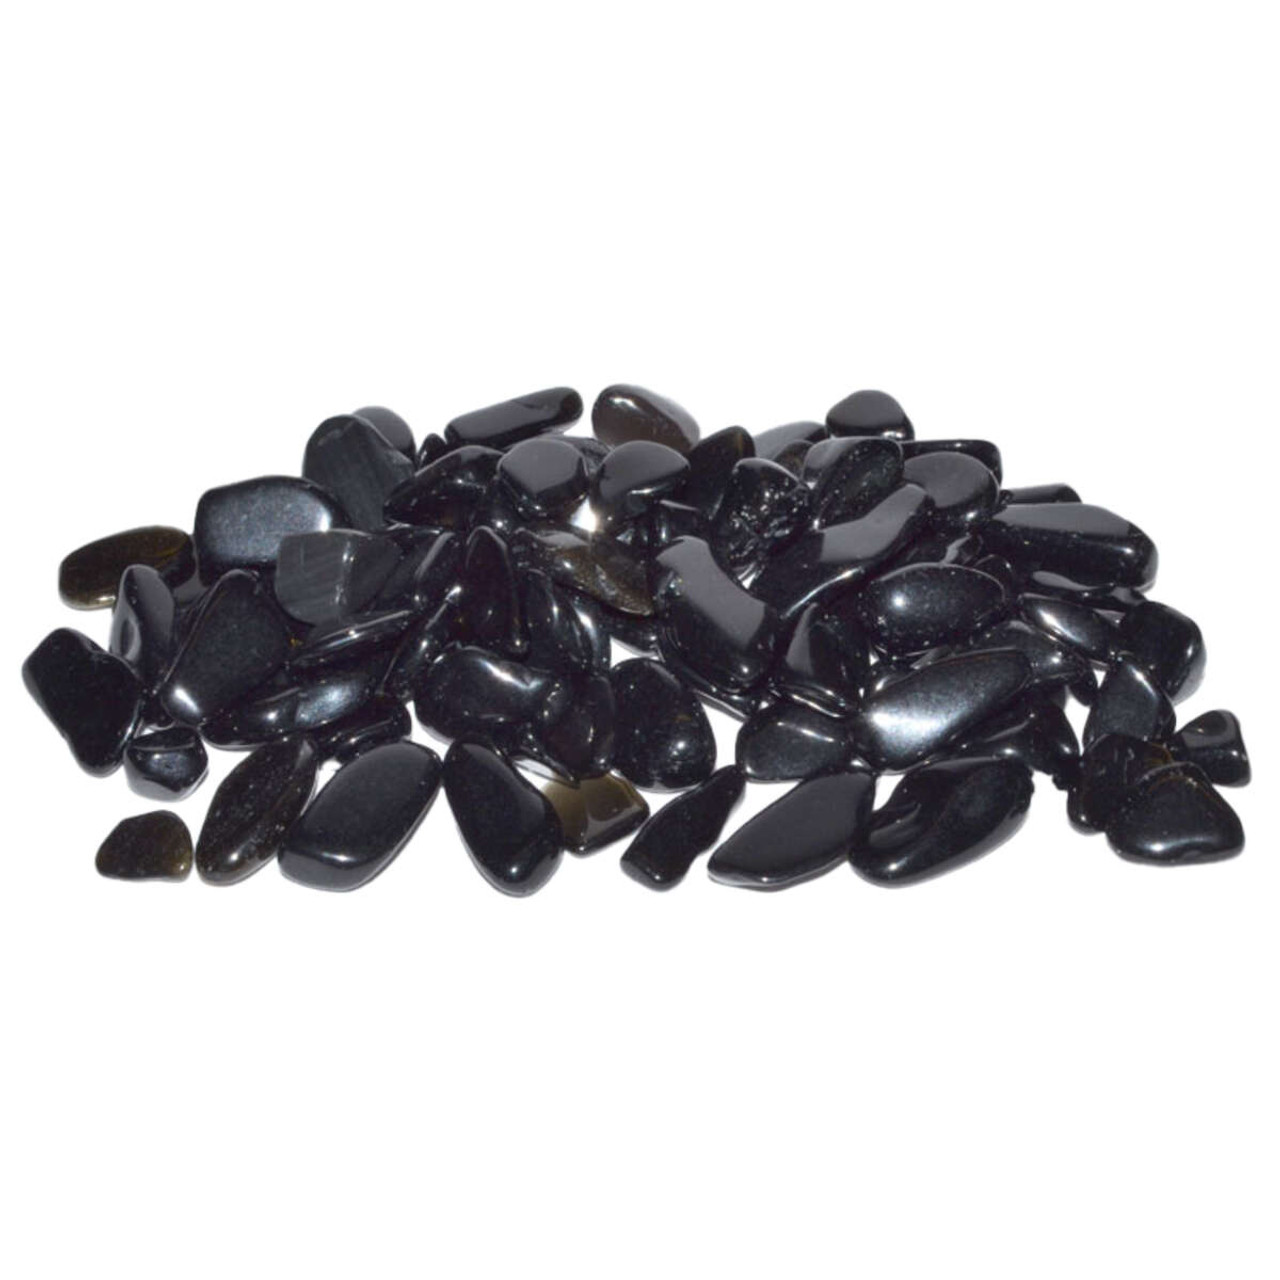 Obsidian, Black Tumbled Chips 7-9mm 1 lb.